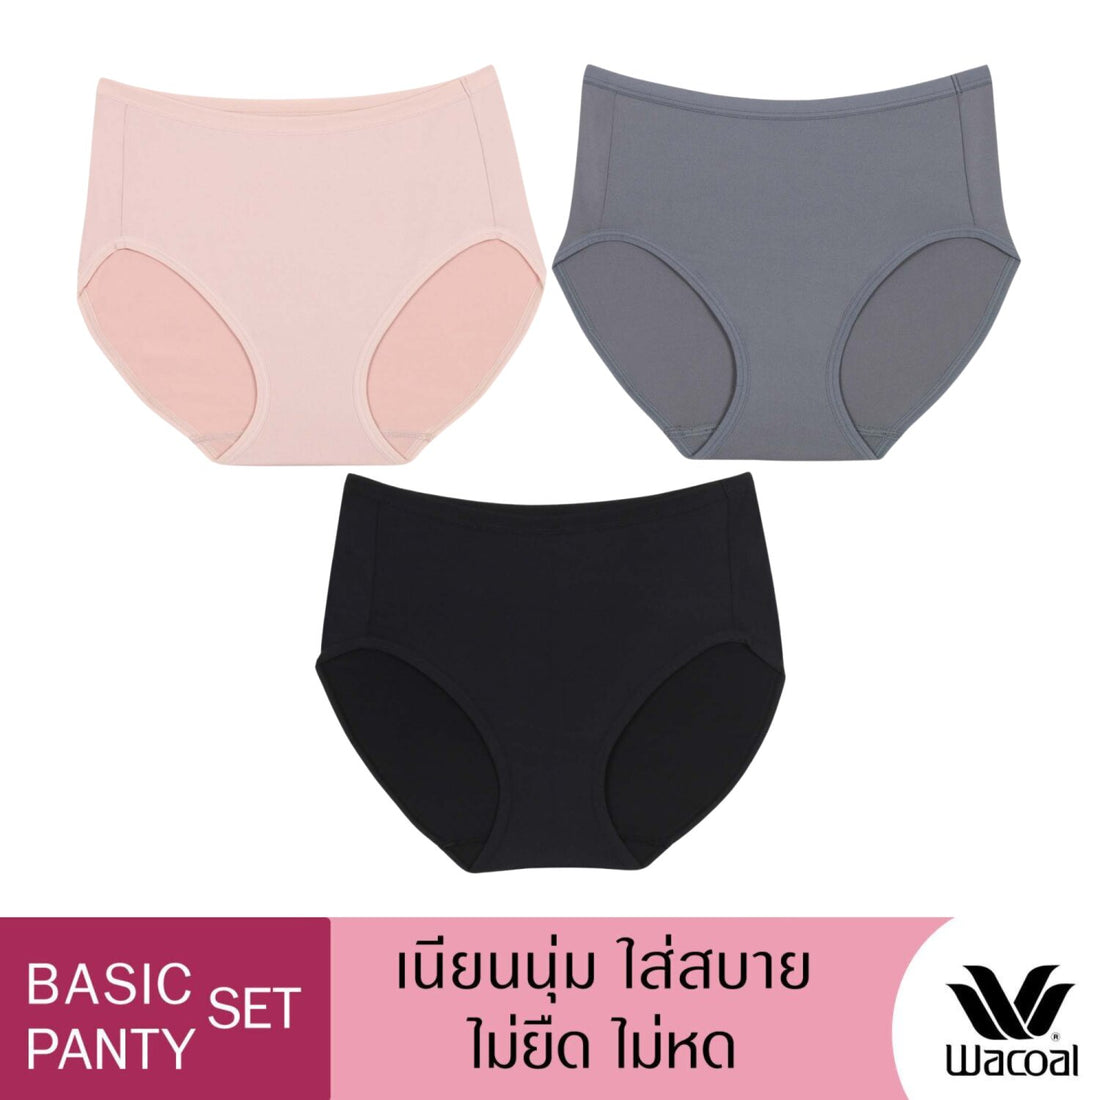 Wacoal Panty pack, comfortable underwear Full figure set 3 pieces, model WU4T34, assorted colors (beige-black-grey)